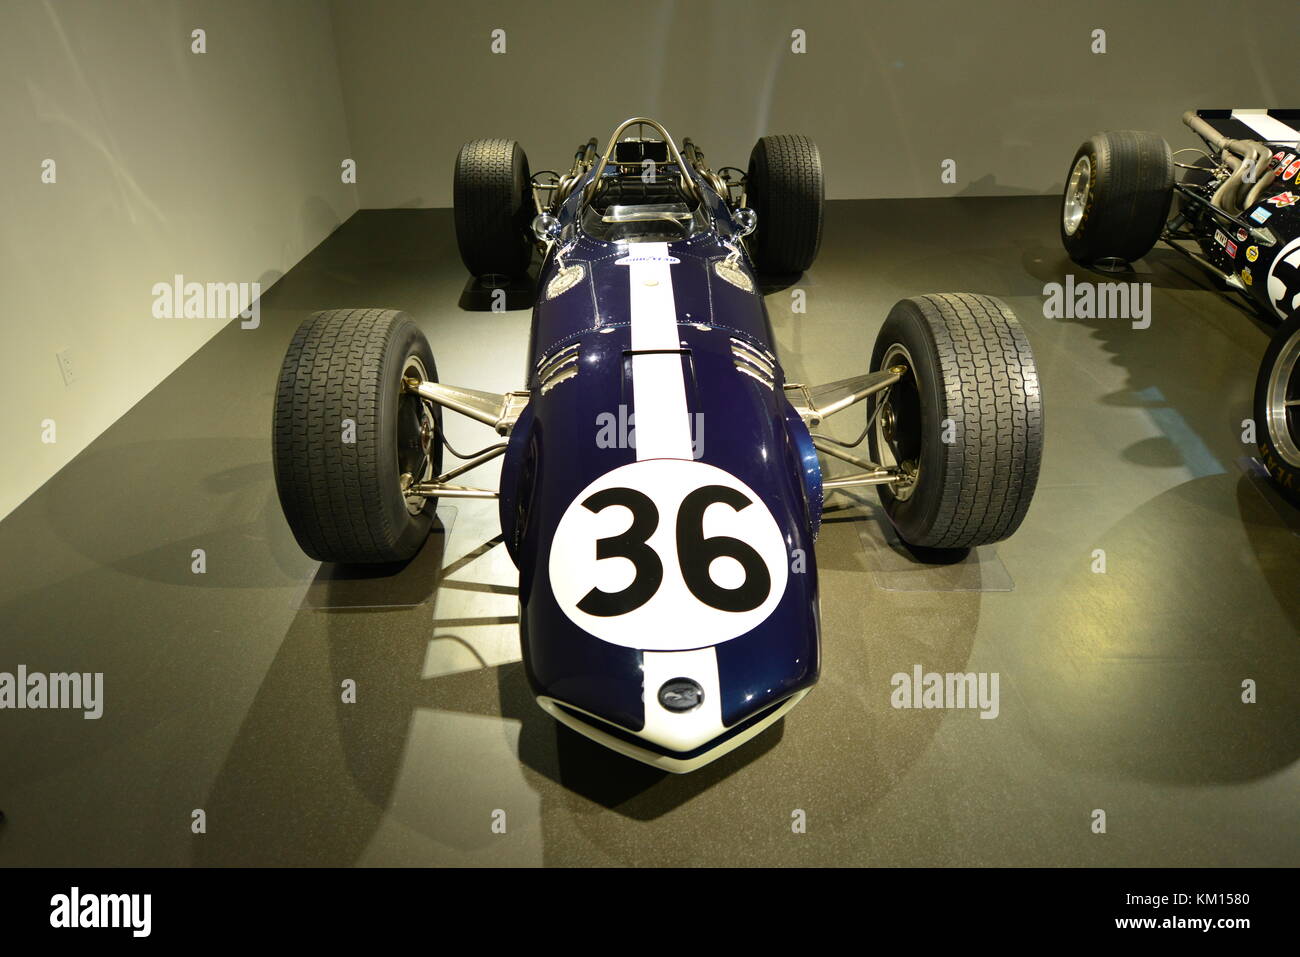 American racing cars Stock Photo